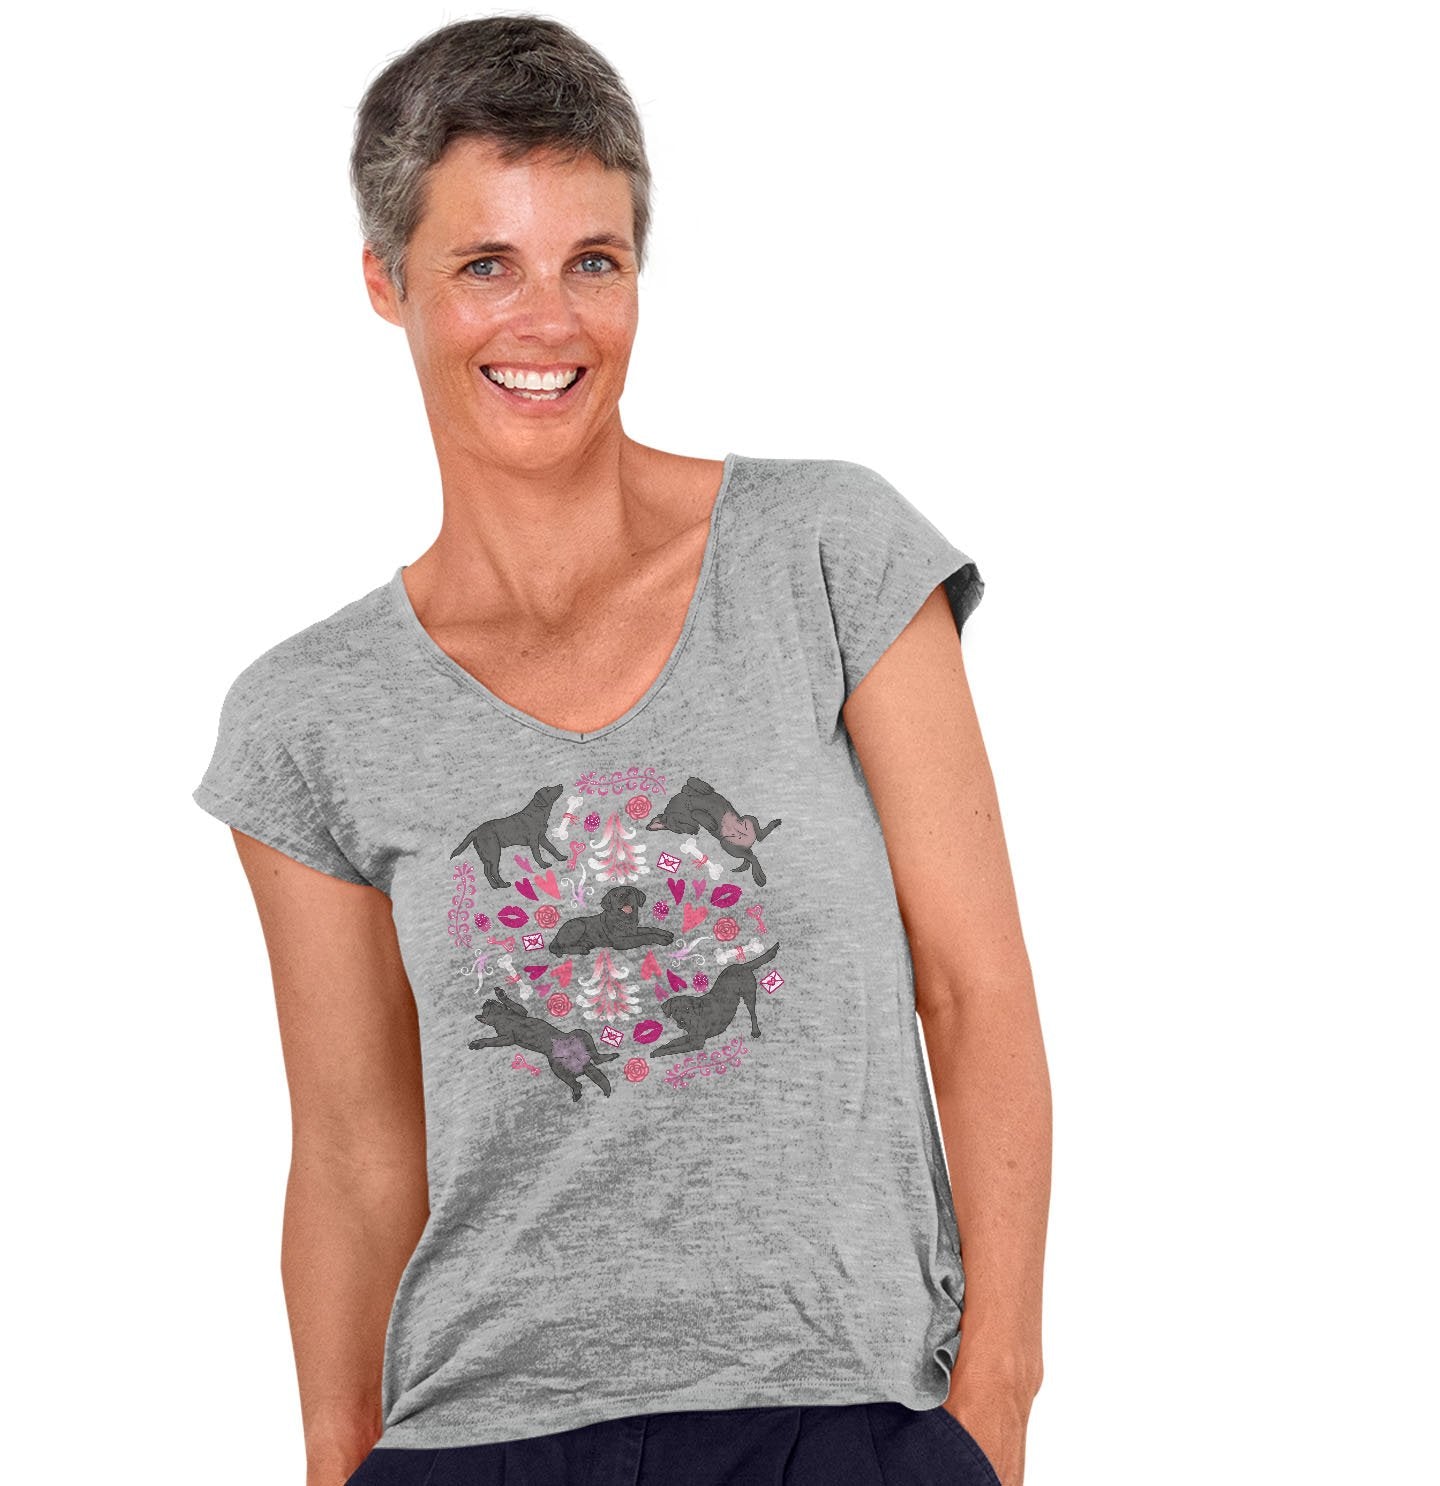 Black Labrador Pink Fleur Pattern - Women's V-Neck T-Shirt